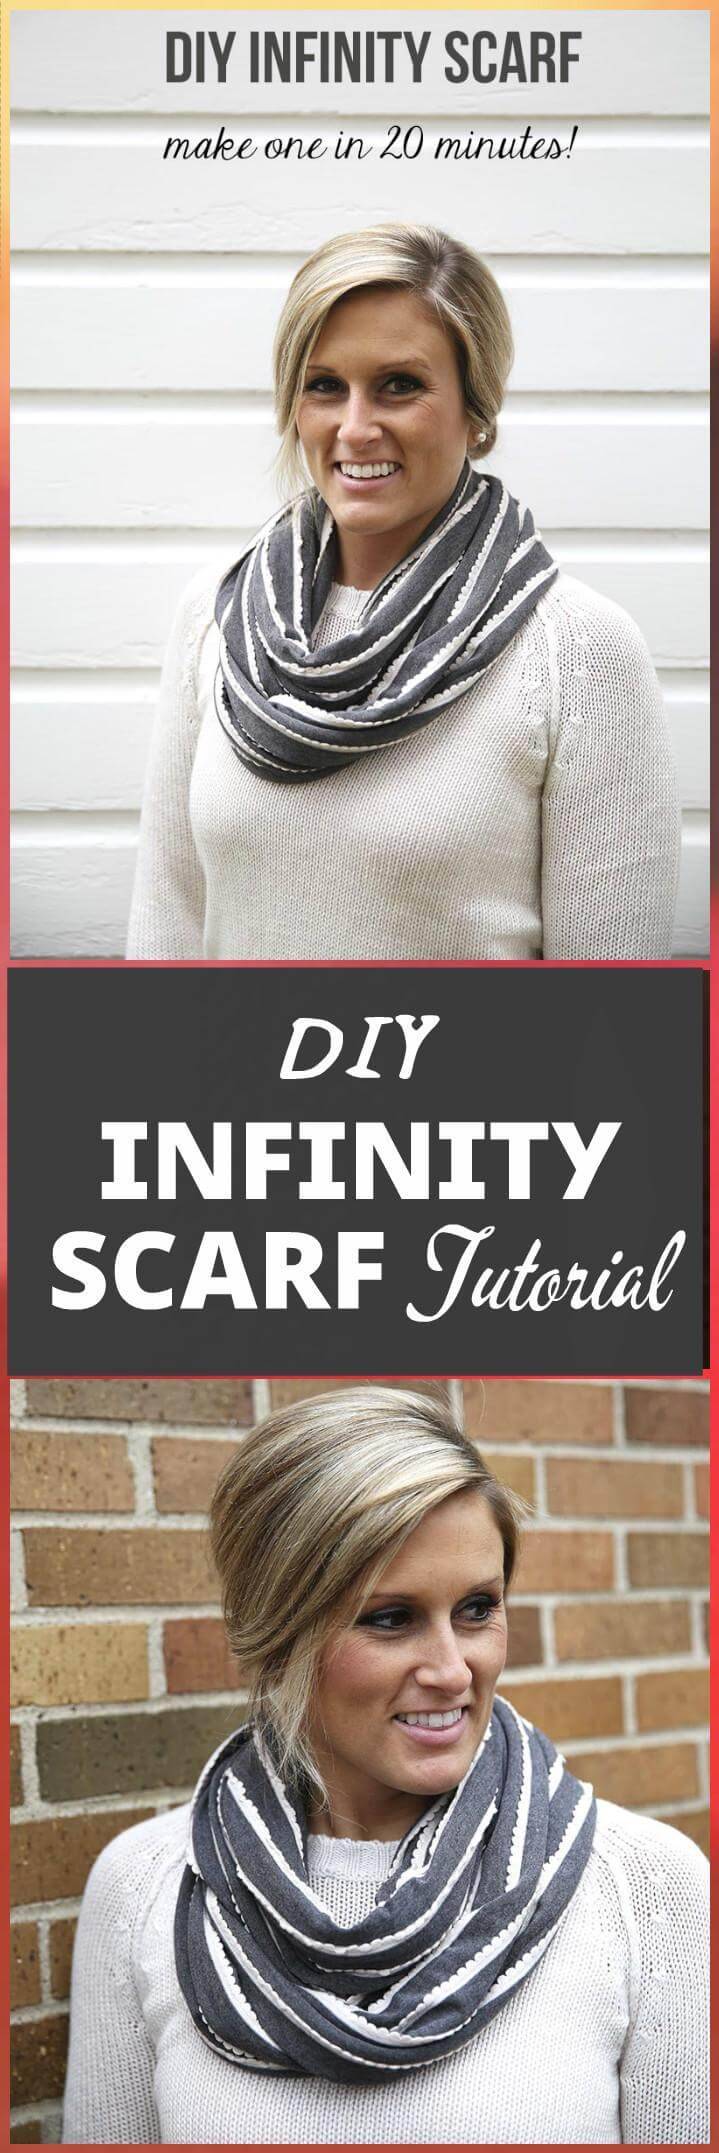 self-made infinity scarf